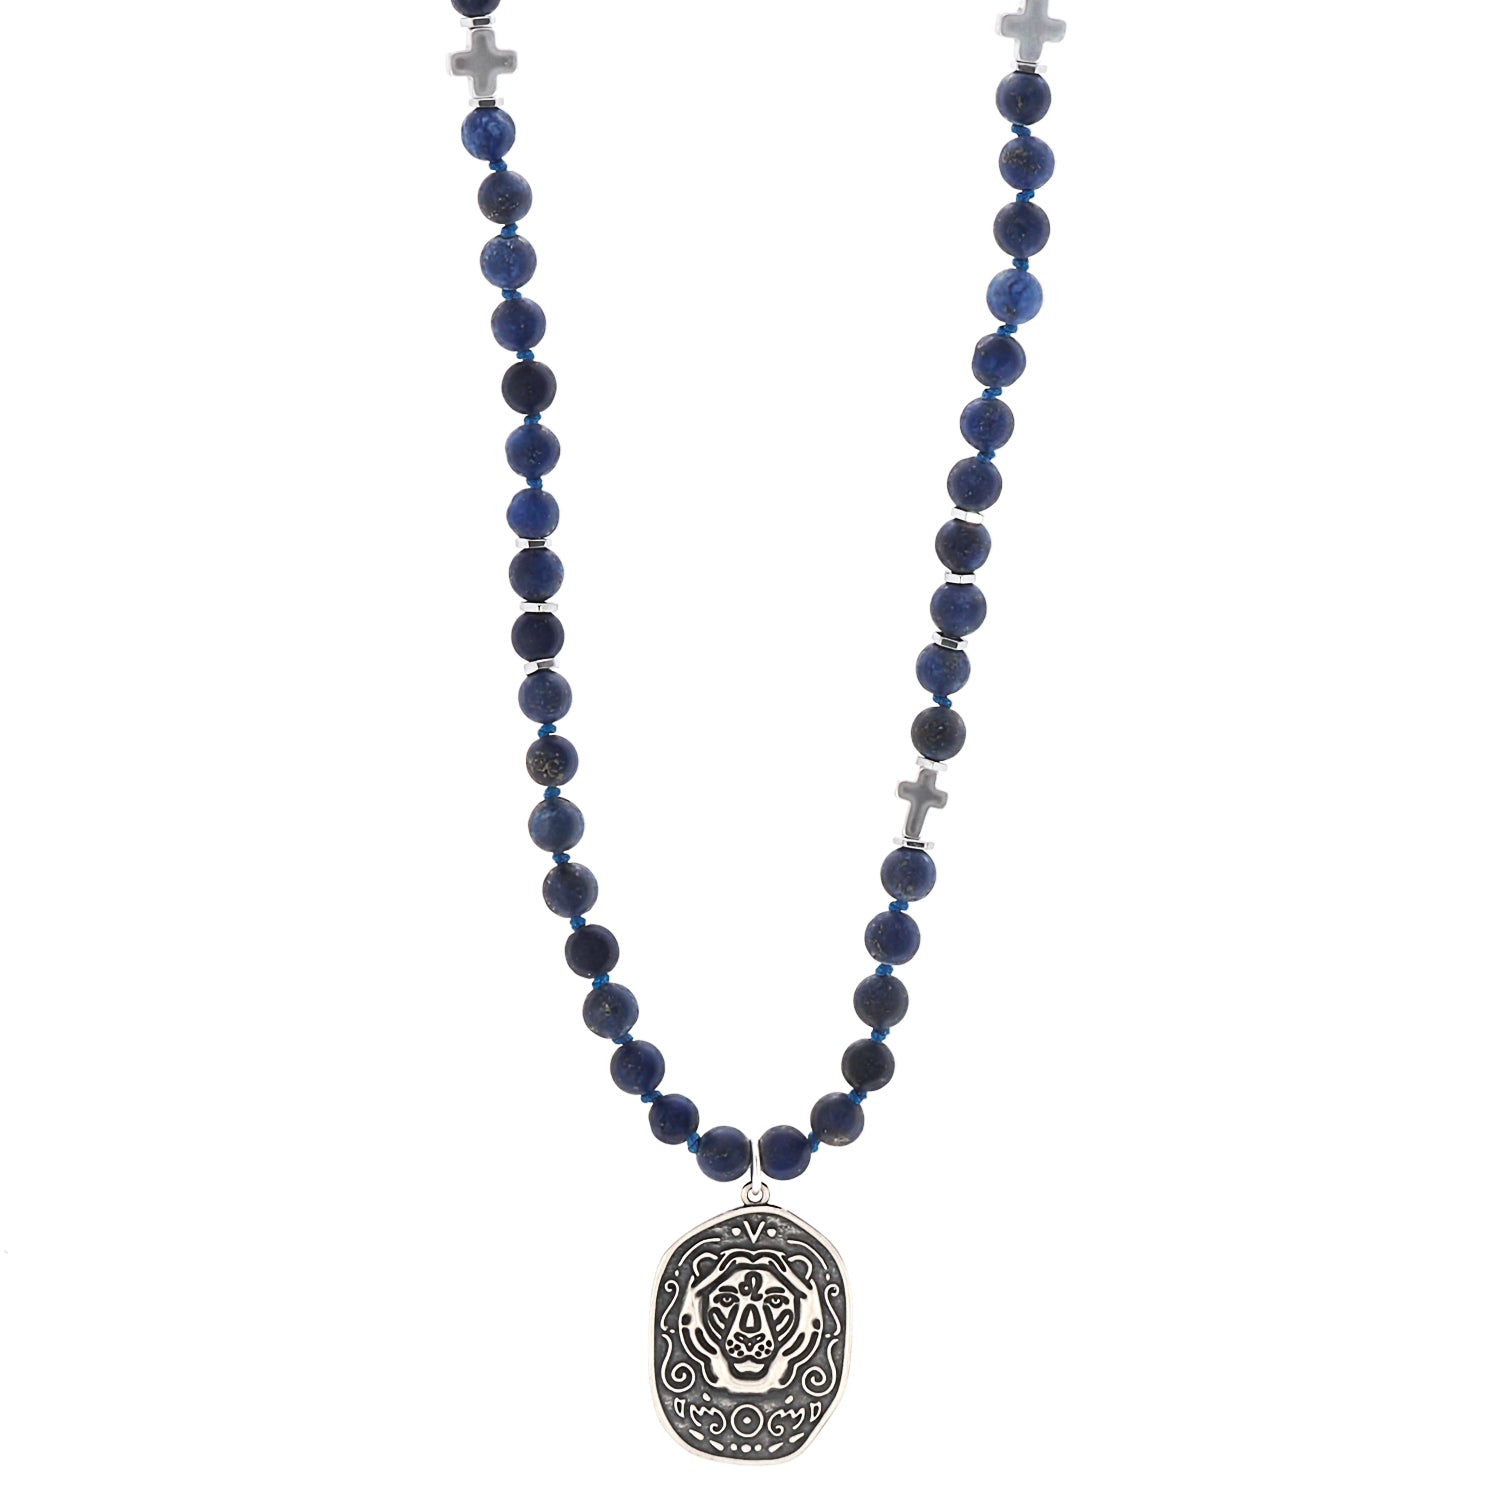 Experience the spiritual energy of the Spiritual Lapis Lazuli Lion necklace, adorned with lapis lazuli and silver hematite stone beads.